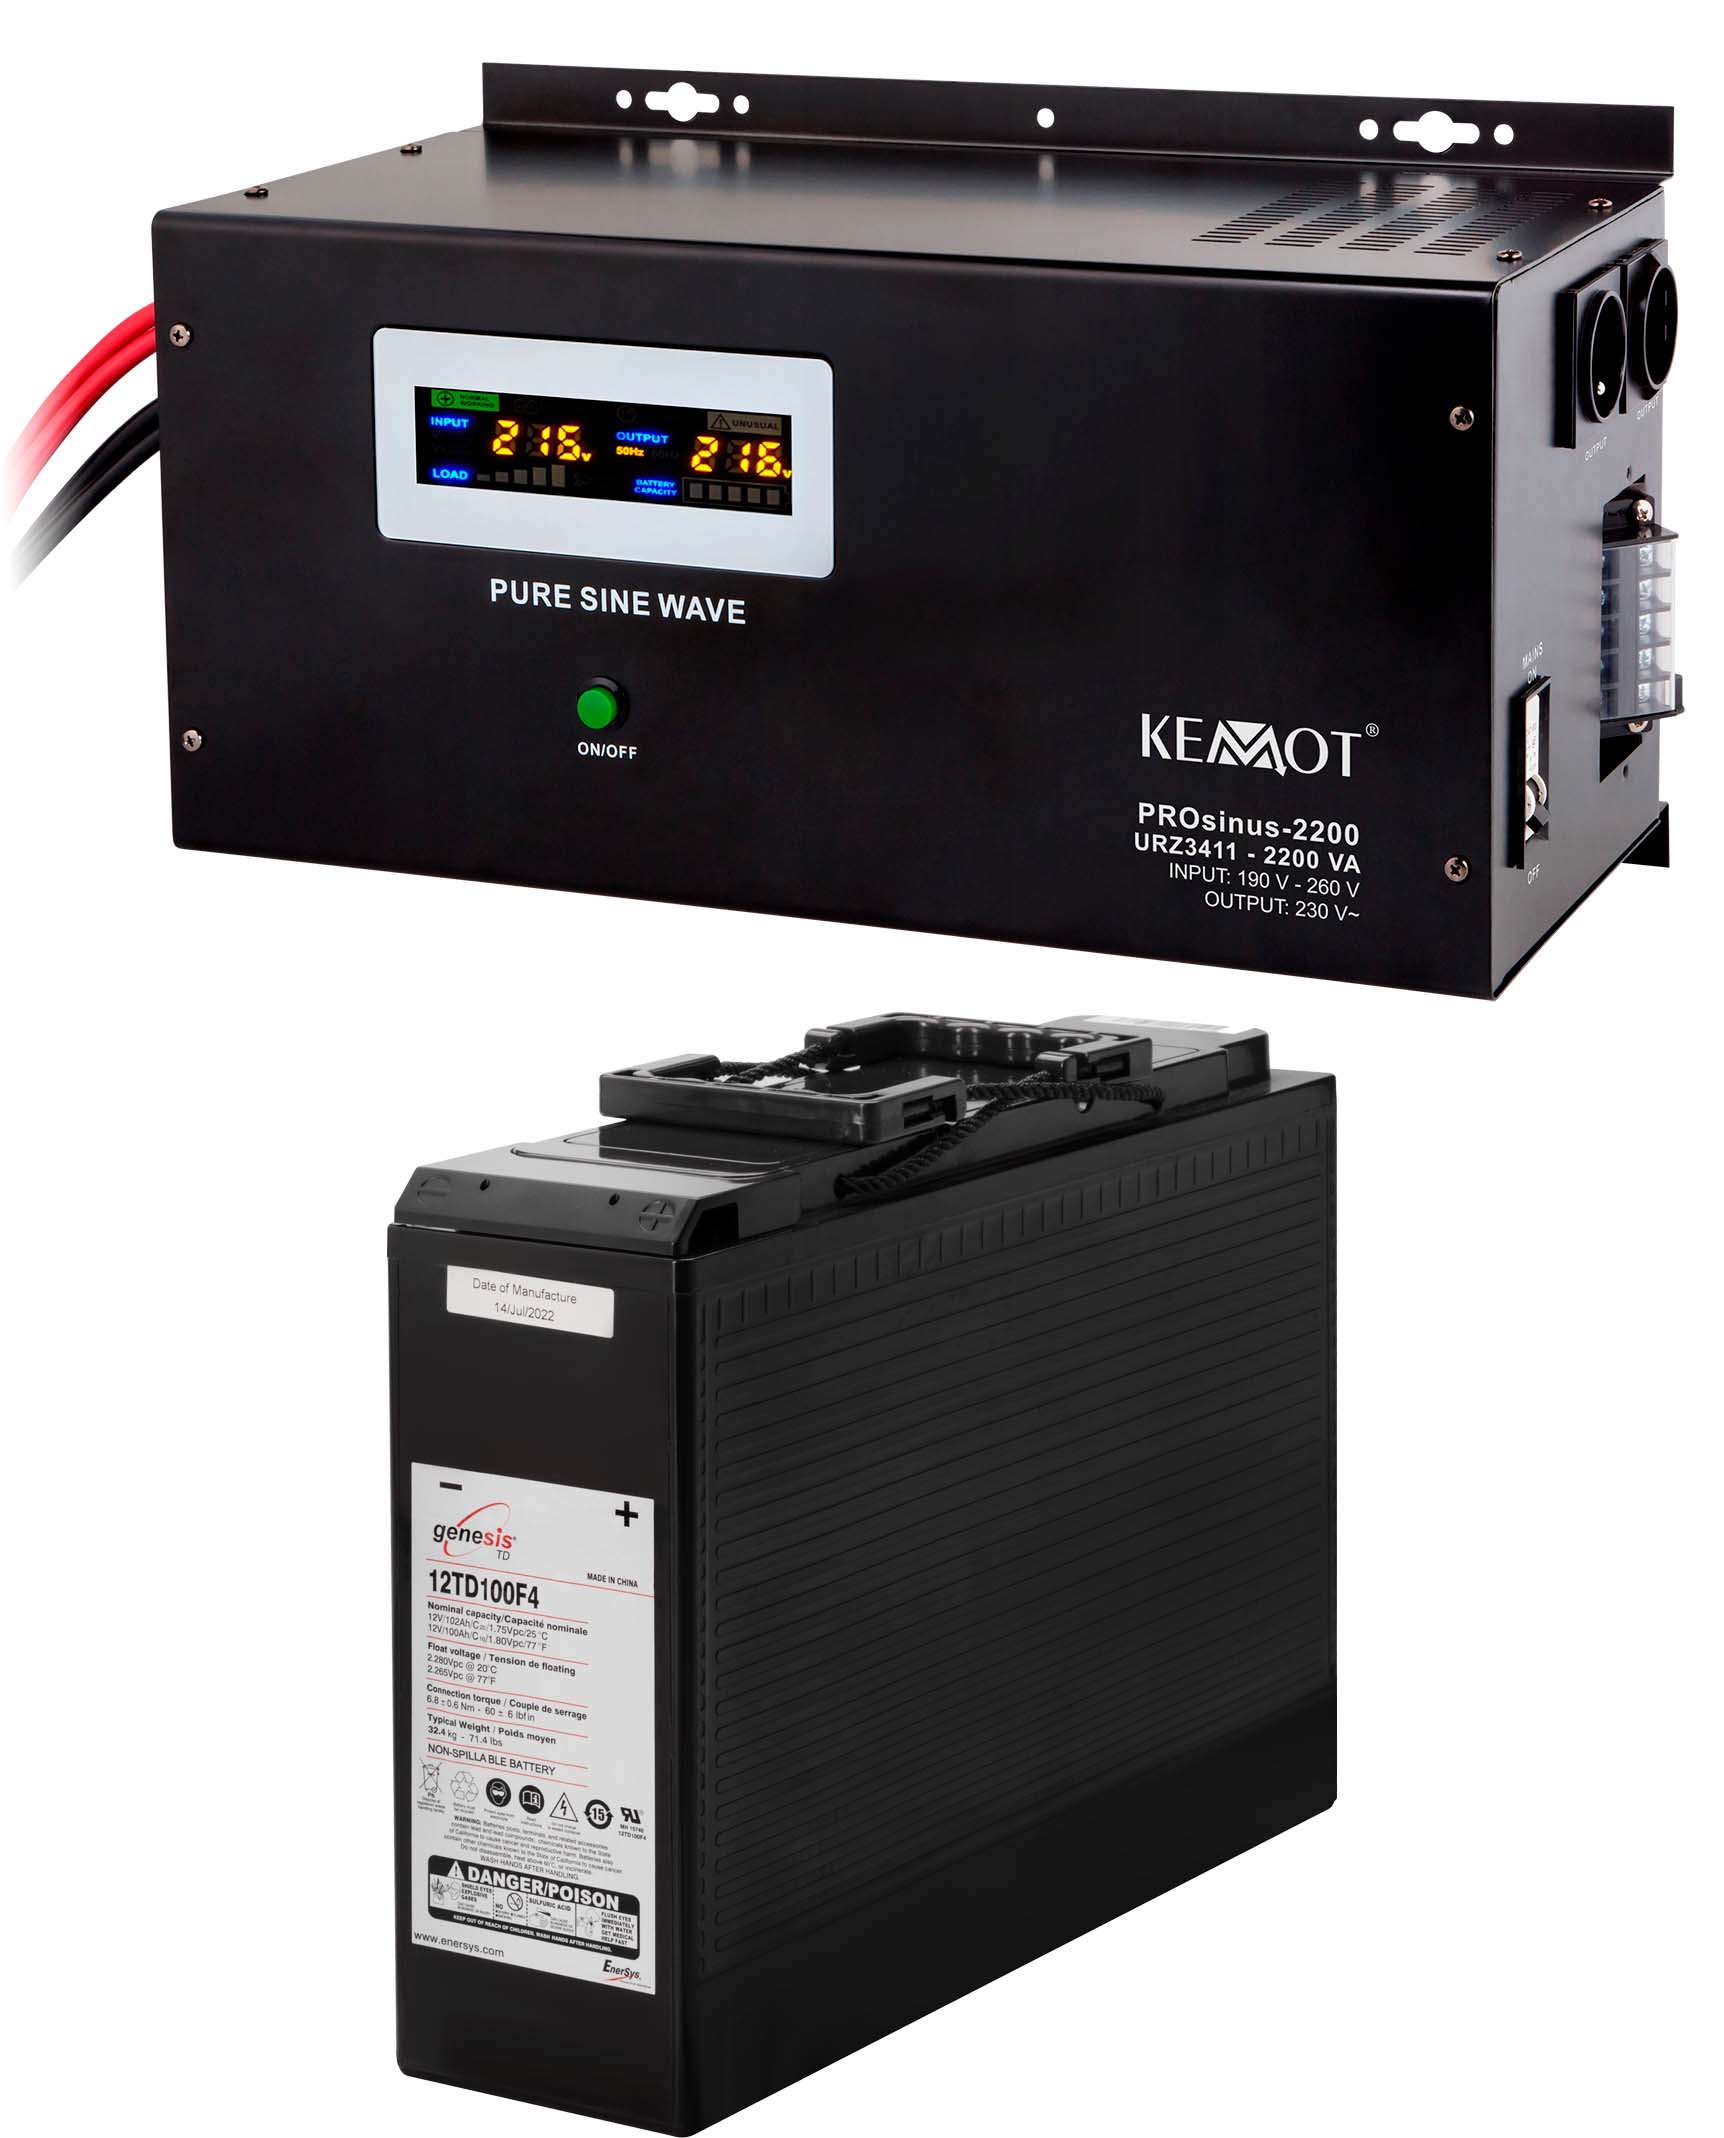 Kemot PROSinus-2200 (URZ3411)+акумулятор Genesis 12TD100F4 (12V100Ah)